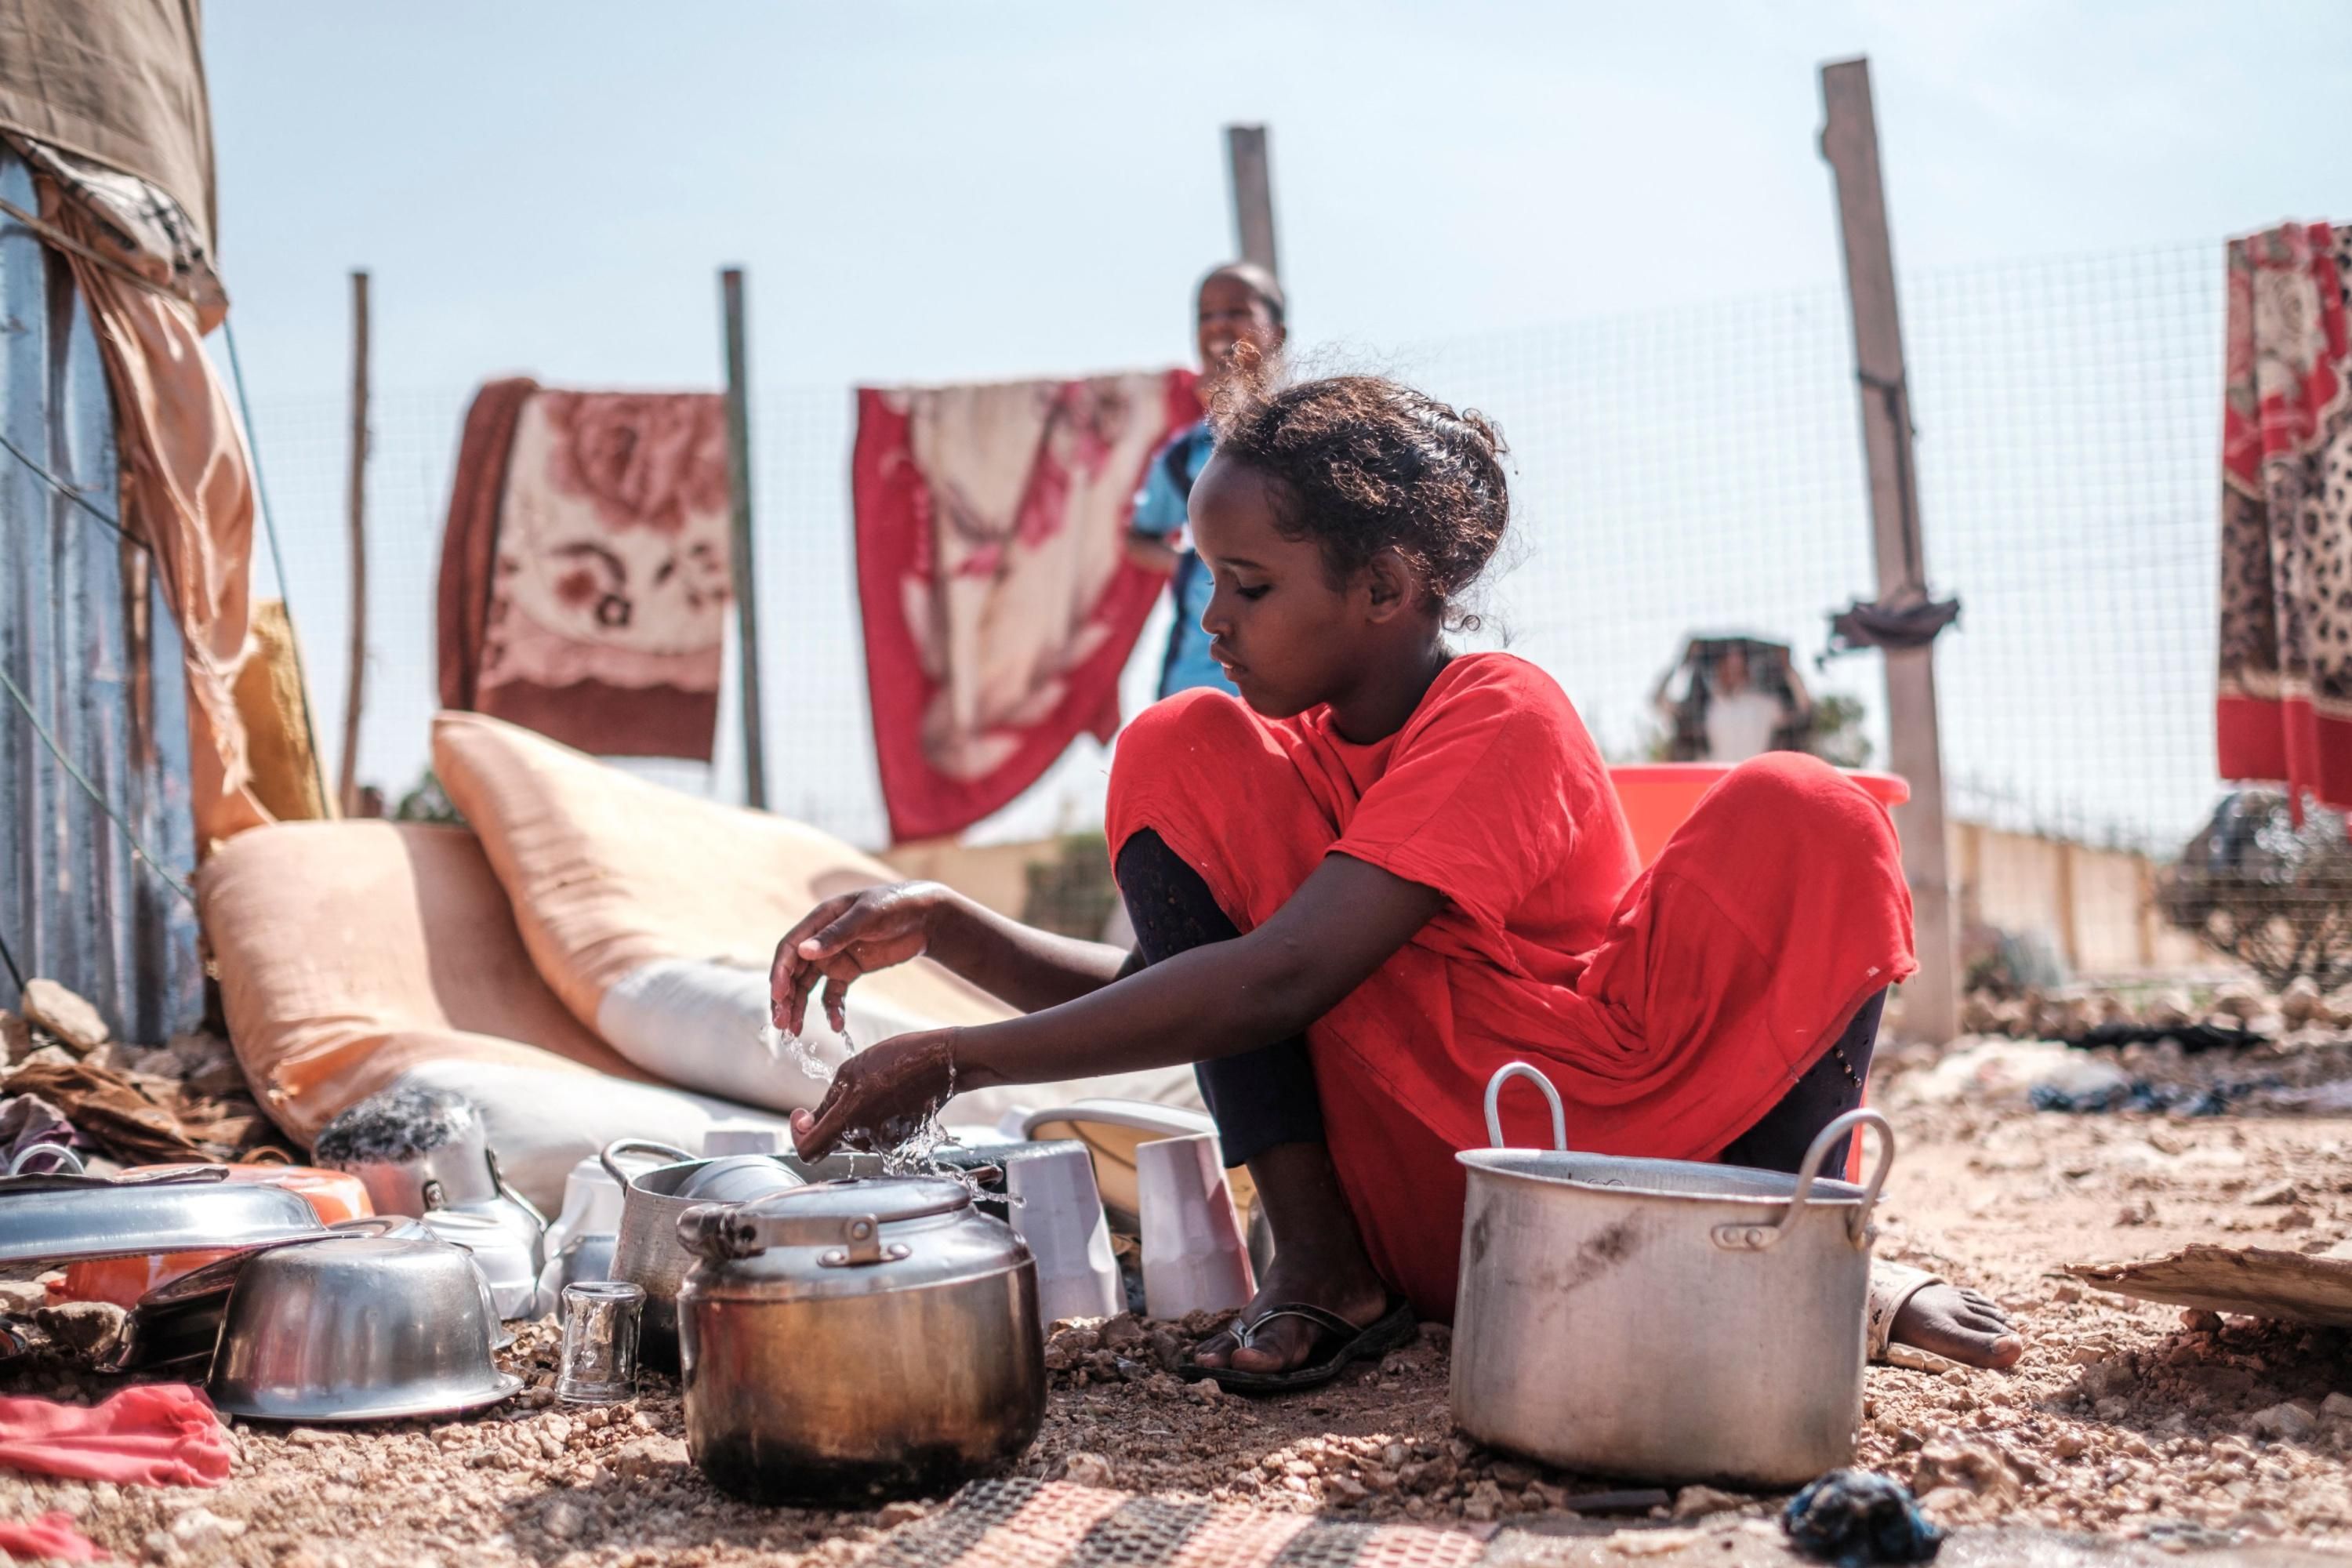 A child washing dishes in Somalia